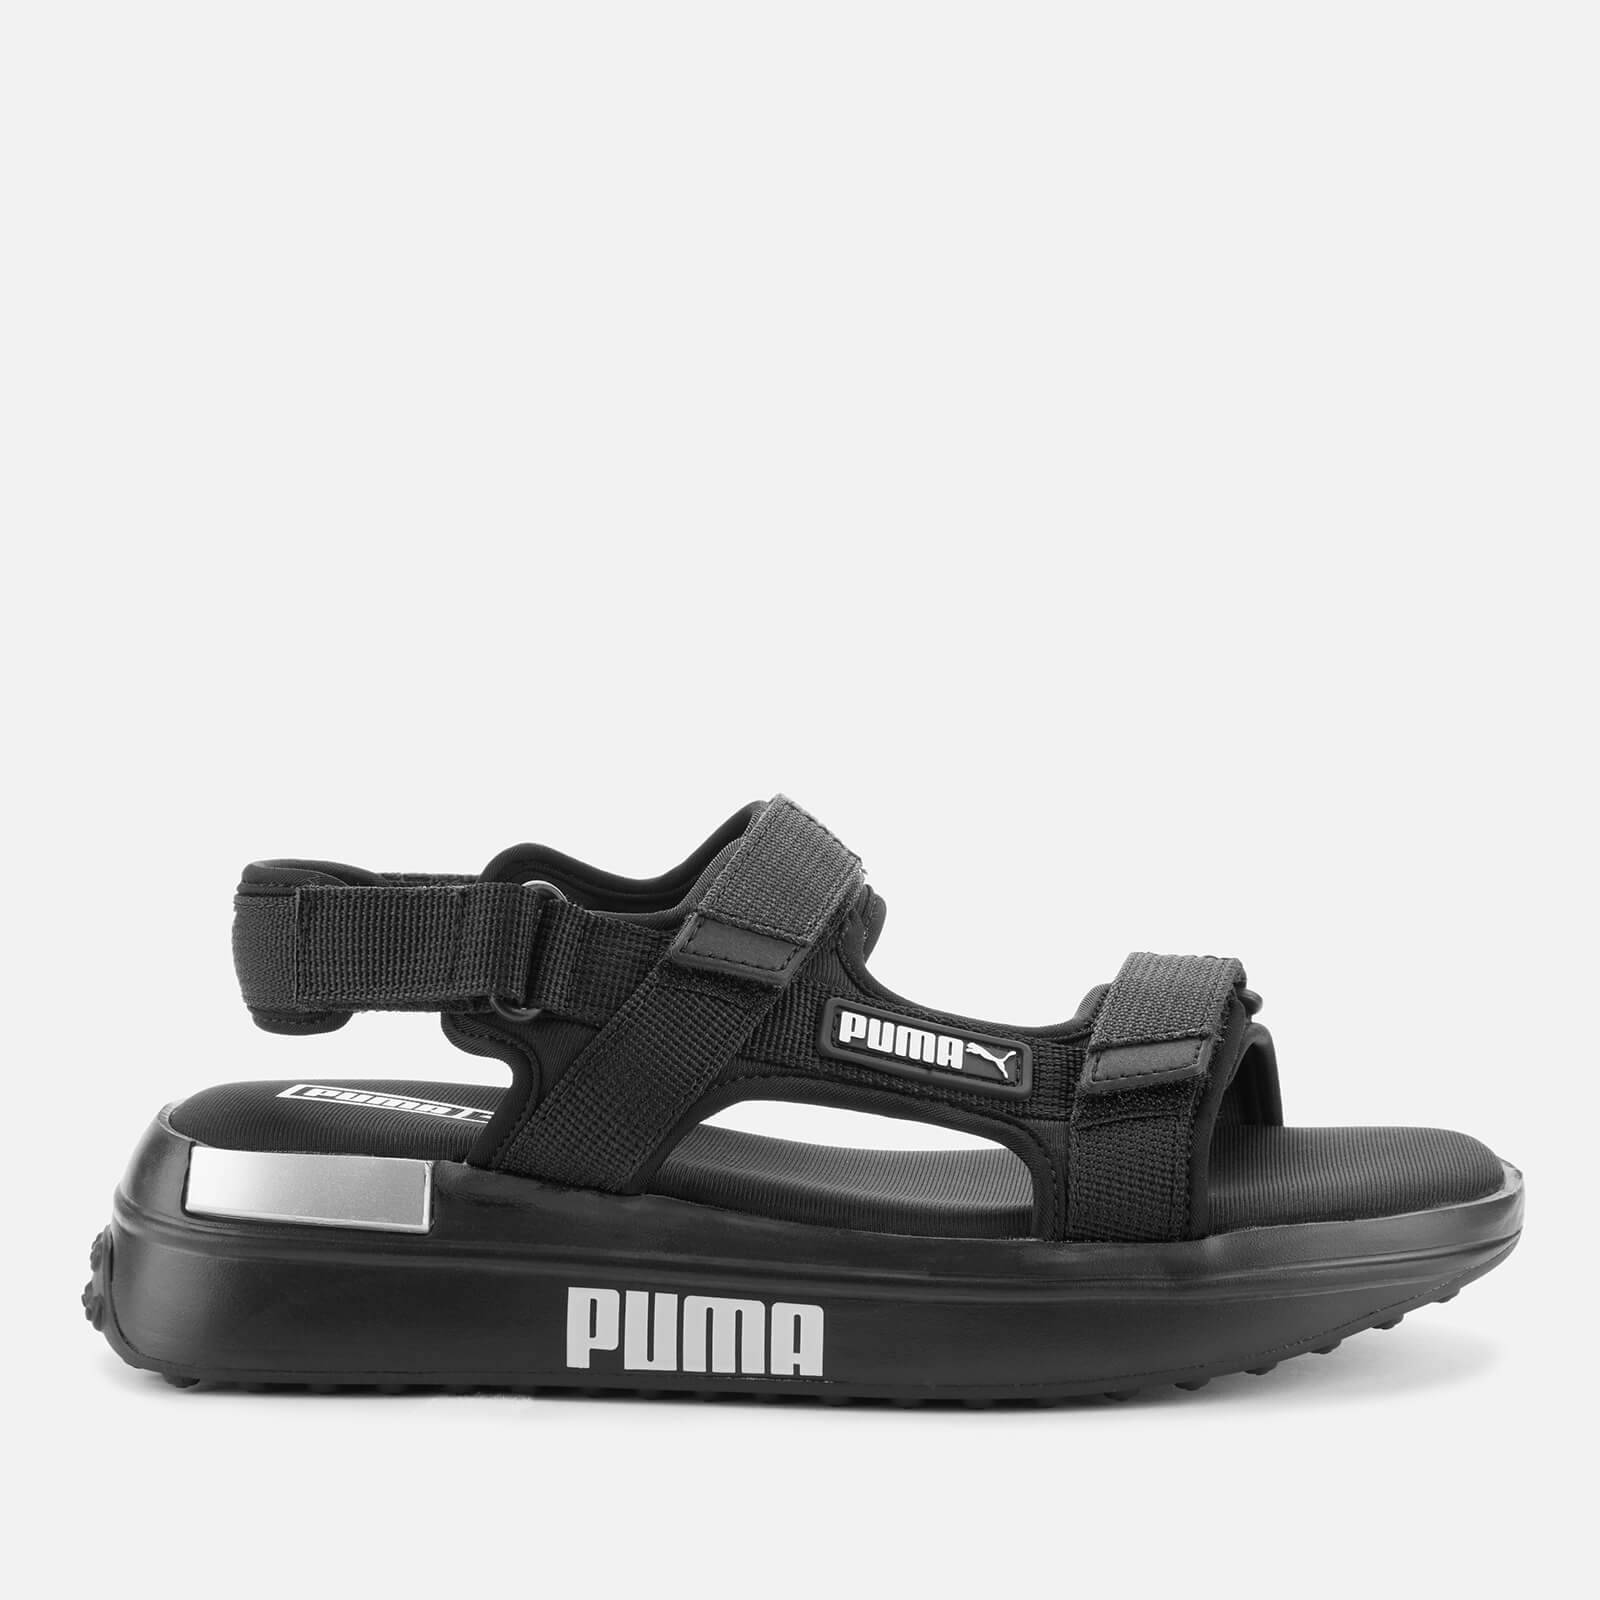 puma women's sandals